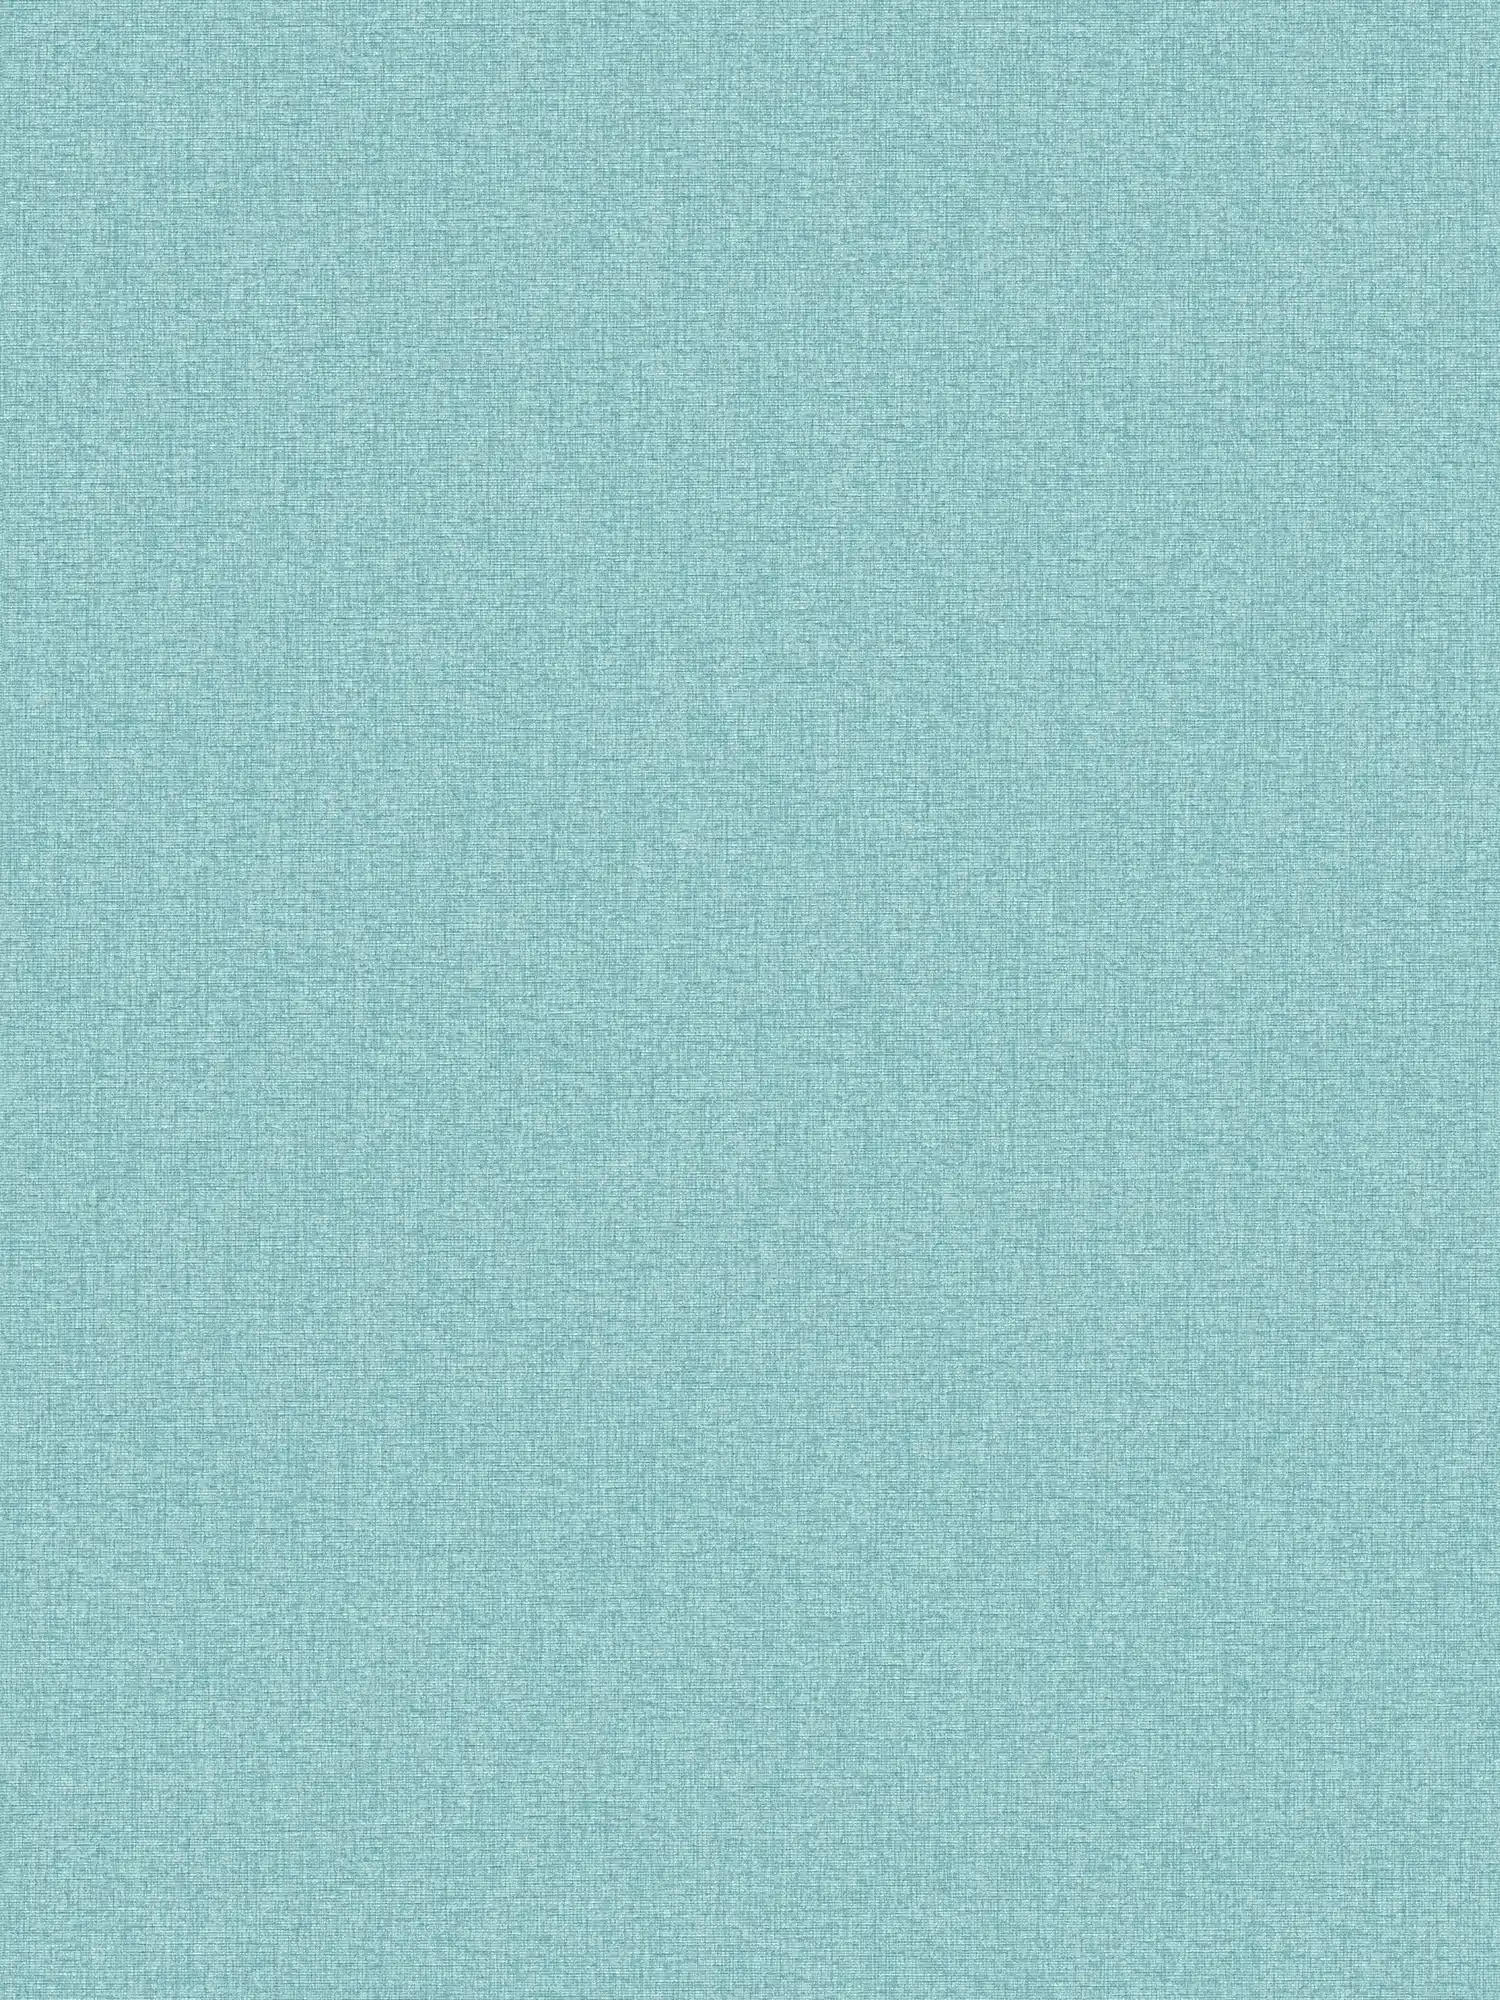 Carta da parati non tessuta a tinta unita con struttura leggera, opaca - turchese, blu, azzurro
